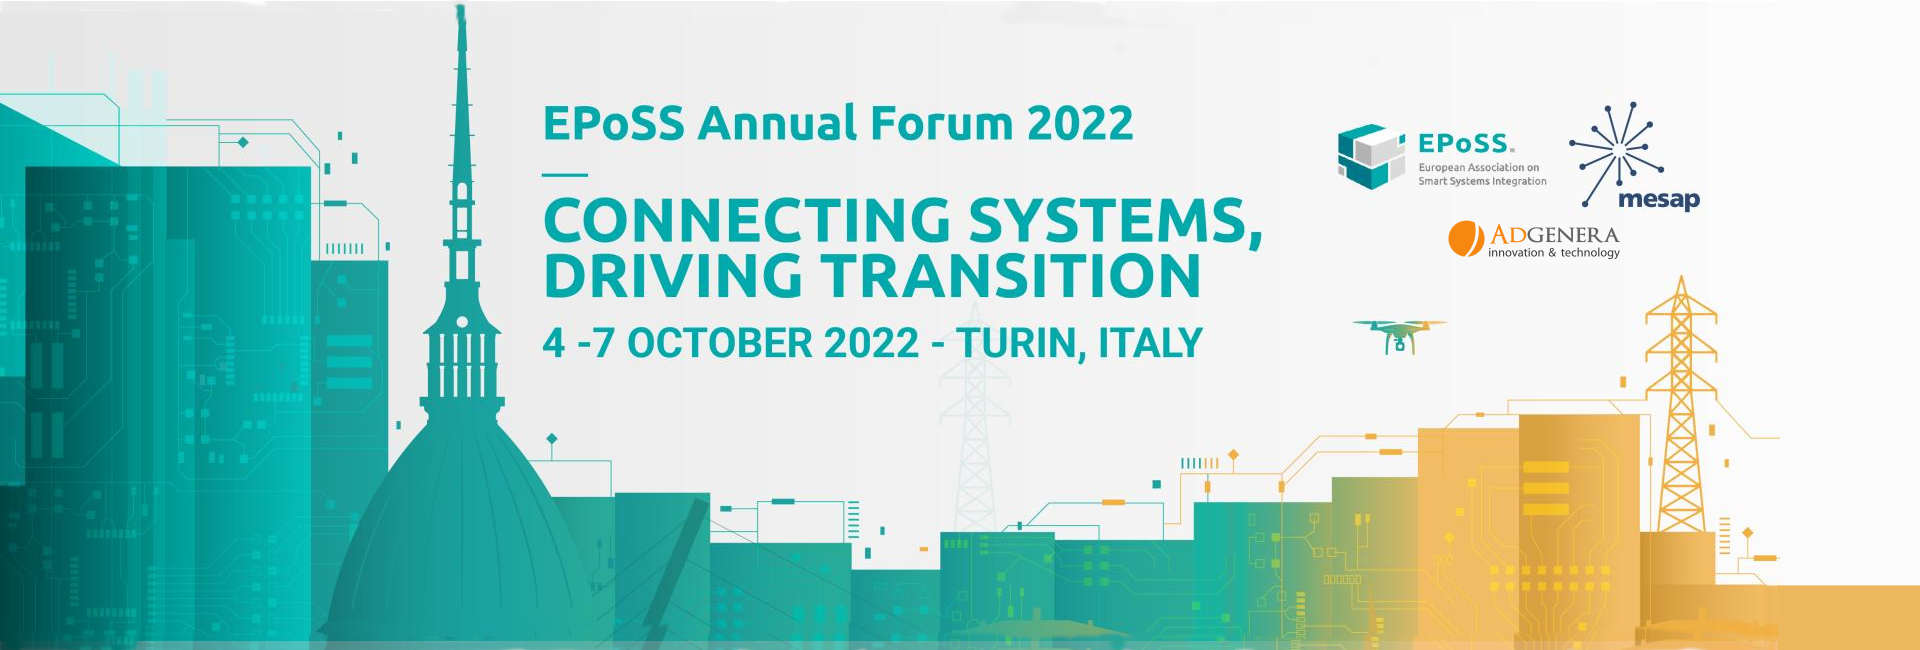 Adgenera takes part to EPoSS Annual Forum in Turin. European Technology Platform on Smart Systems Integration